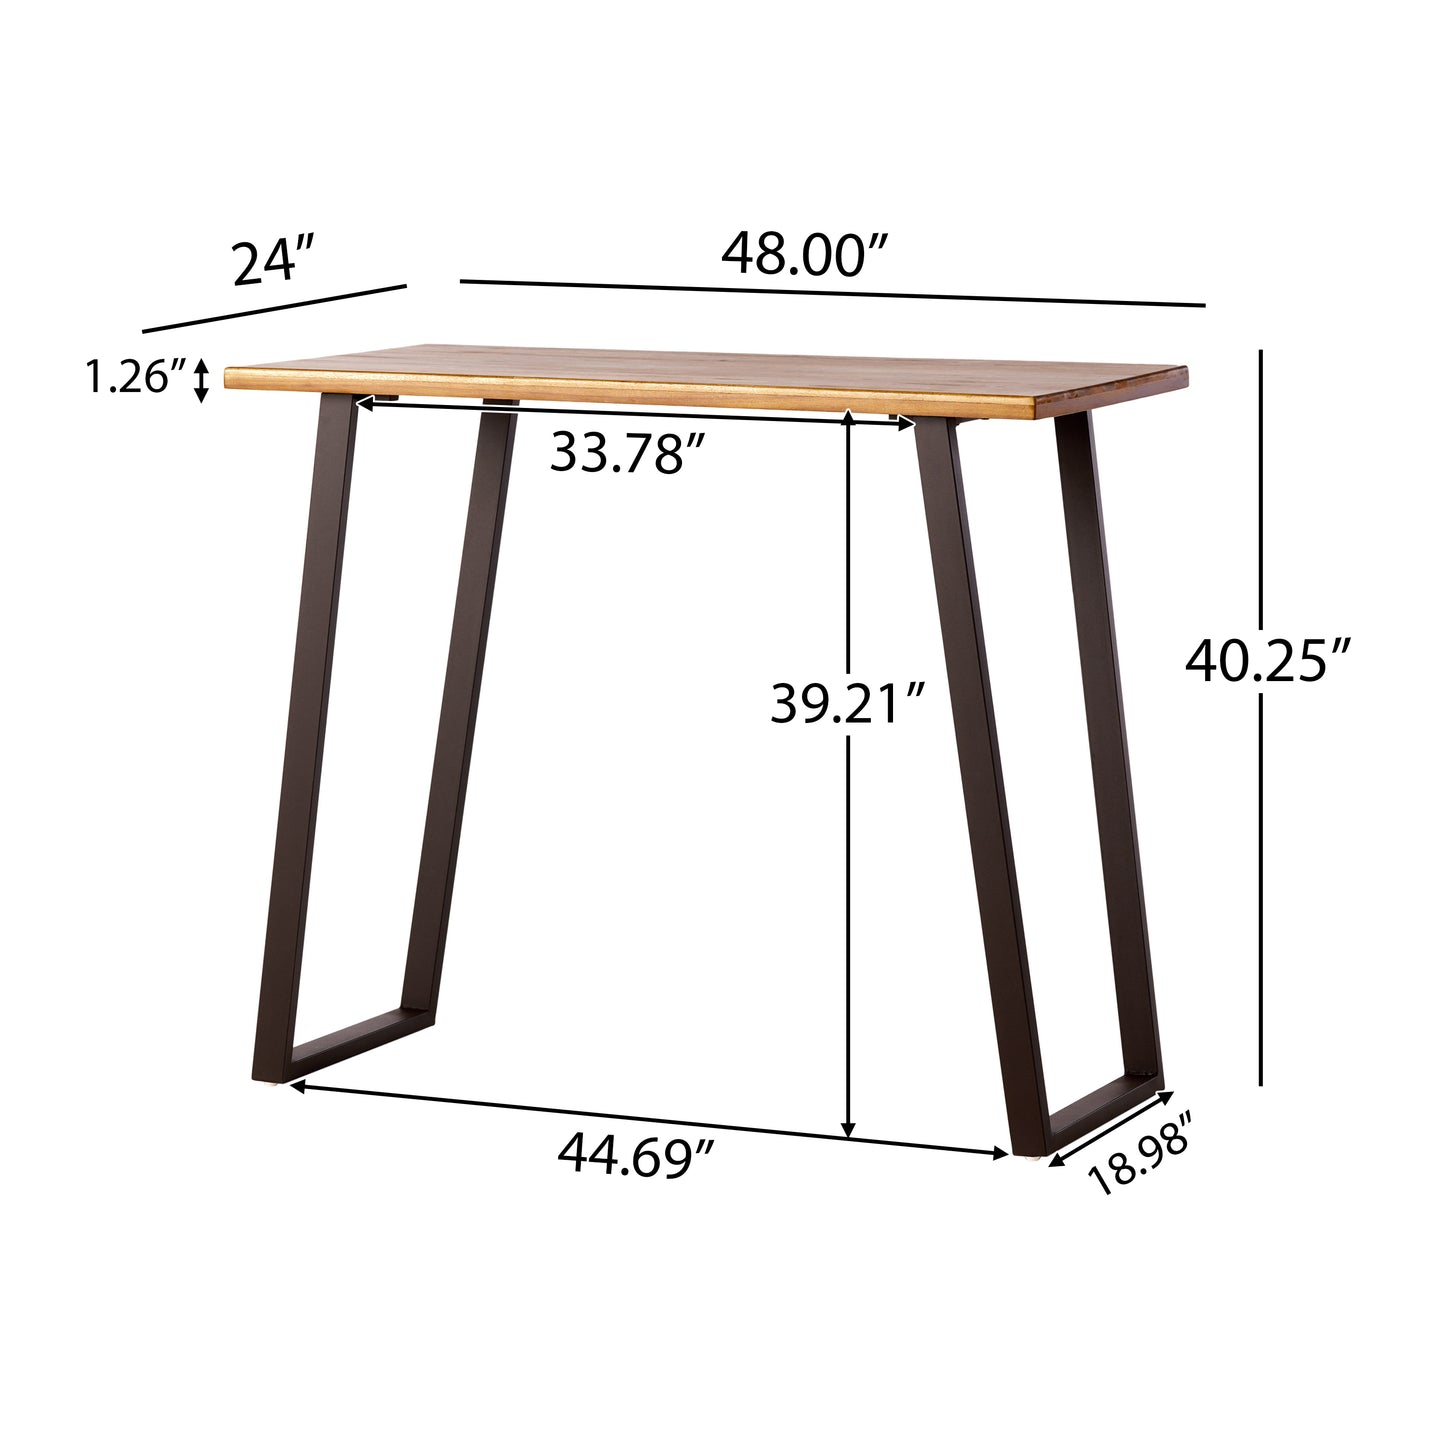 Pablo Acacia Wood and Iron Bar Table, Natural Brown, Rustic Metal